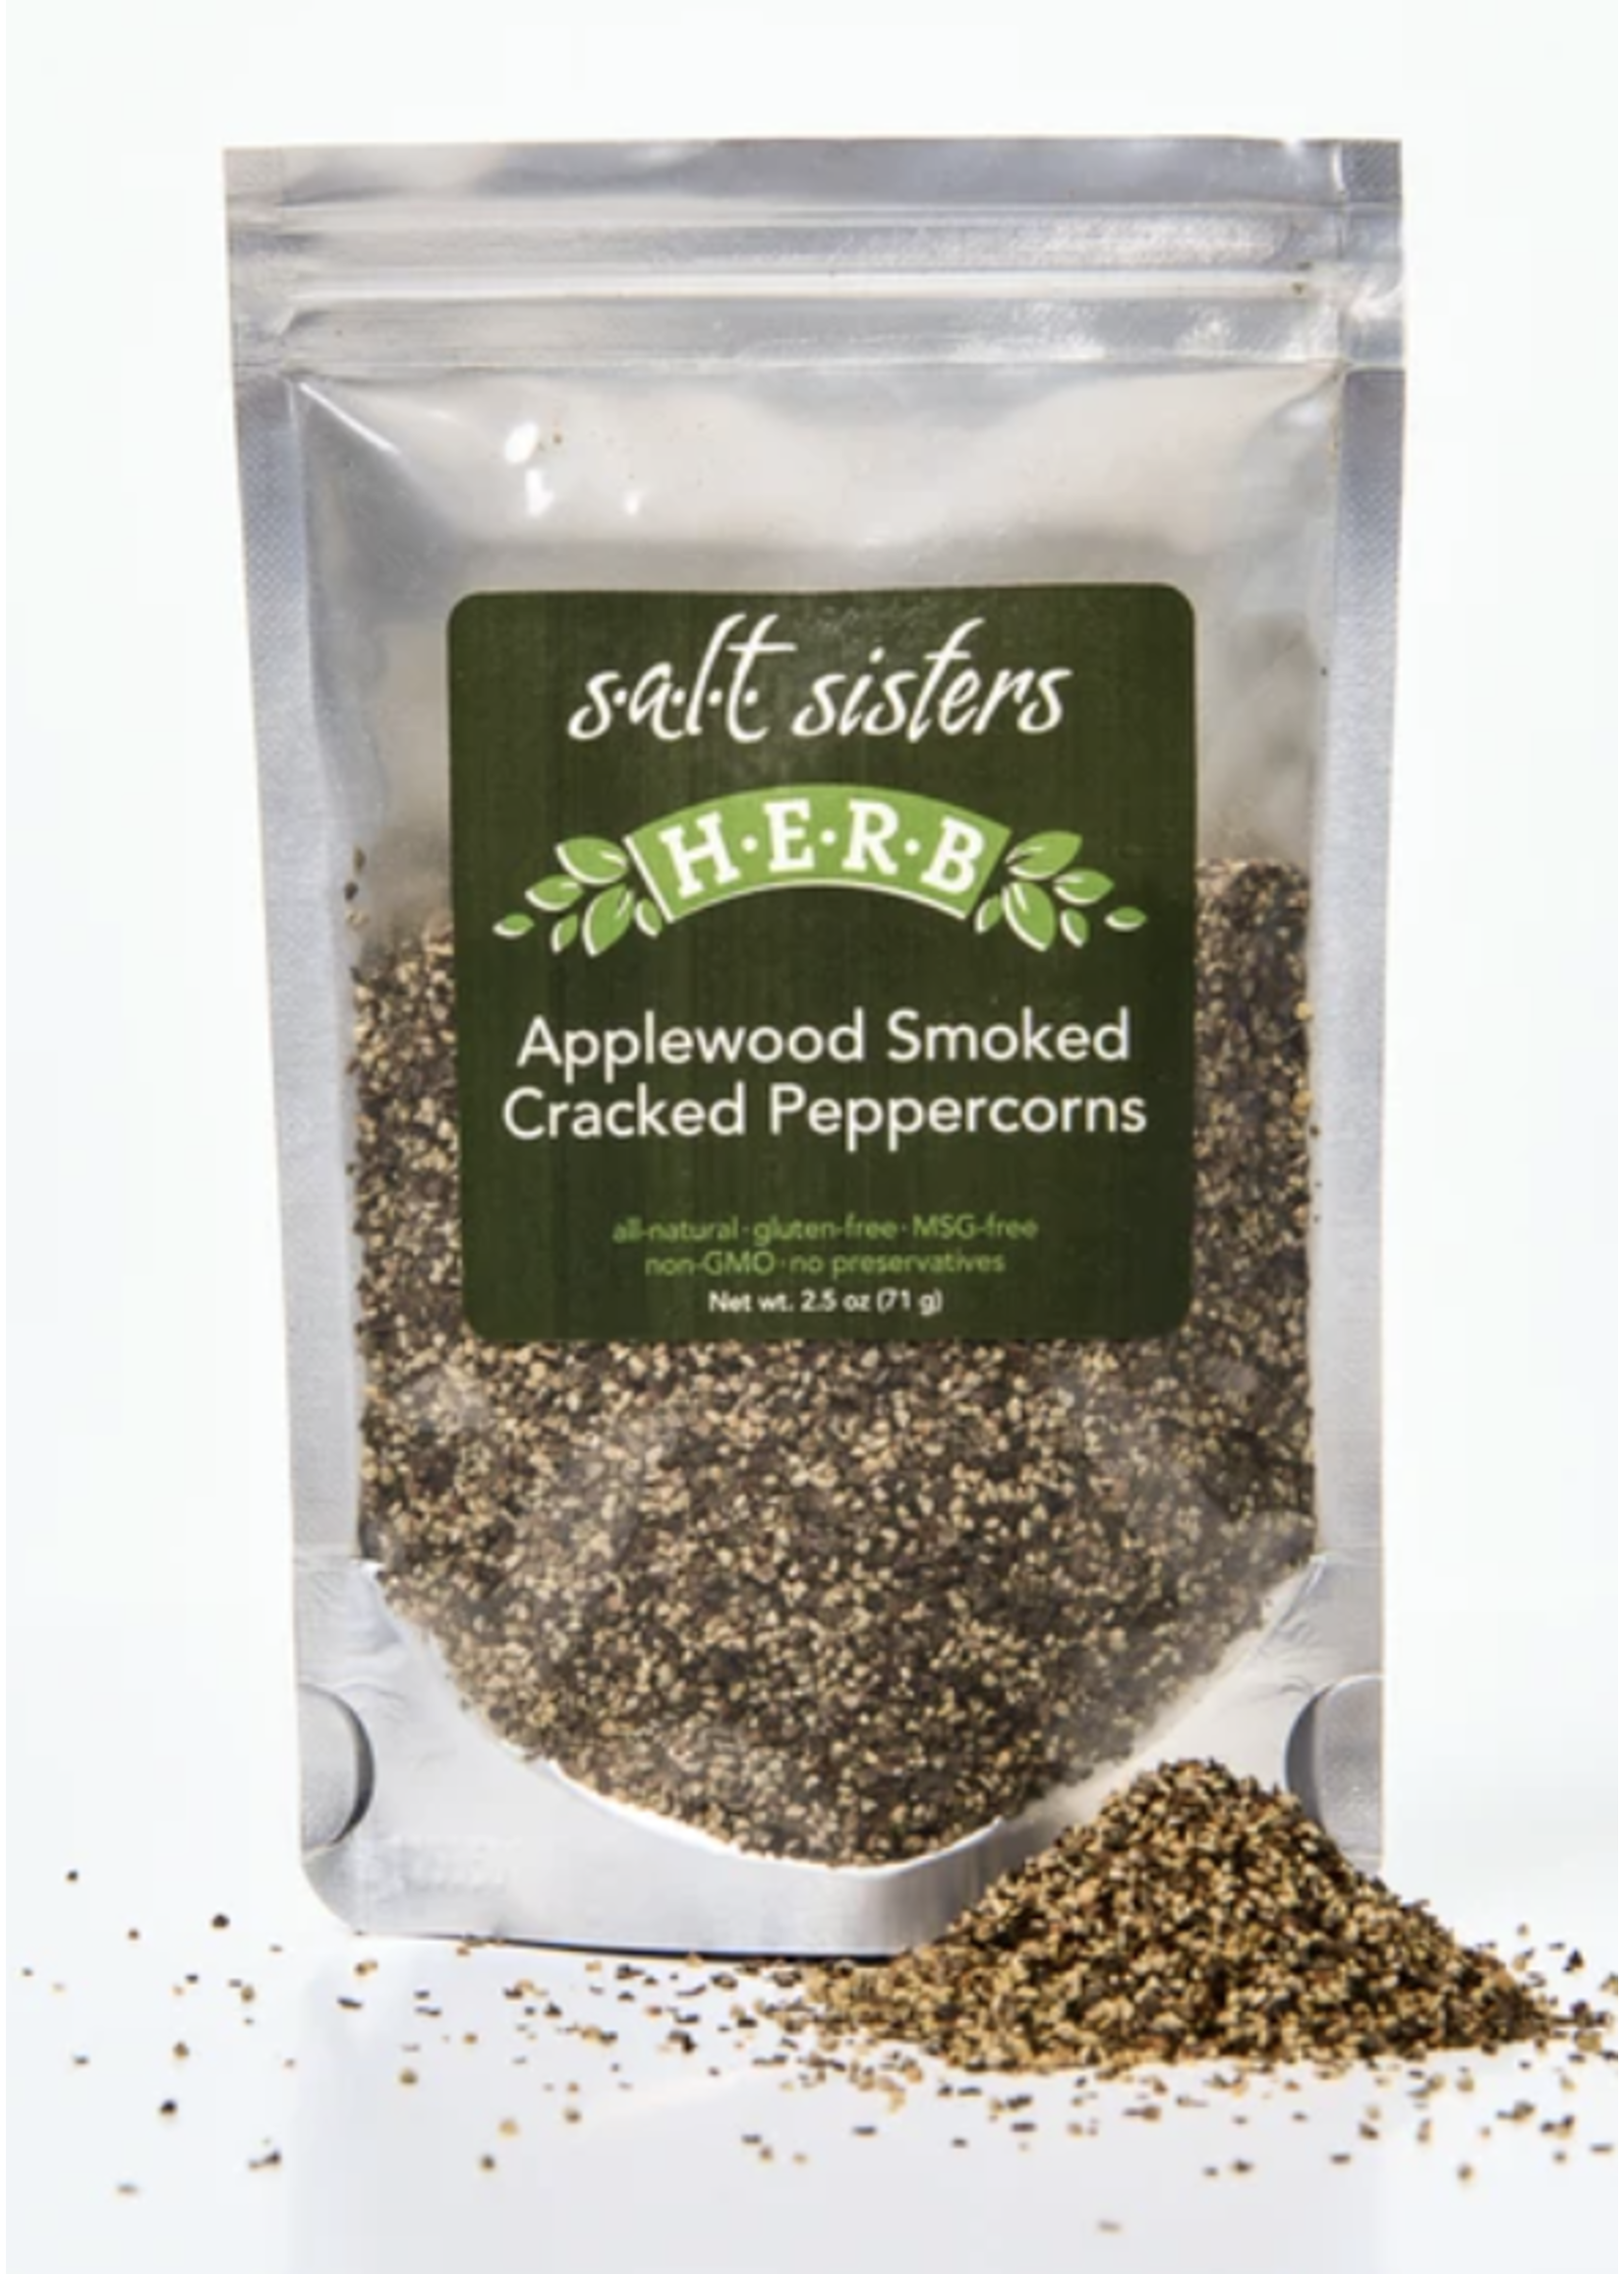 Salt Sisters Applewood Smoked Cracked Peppercorns